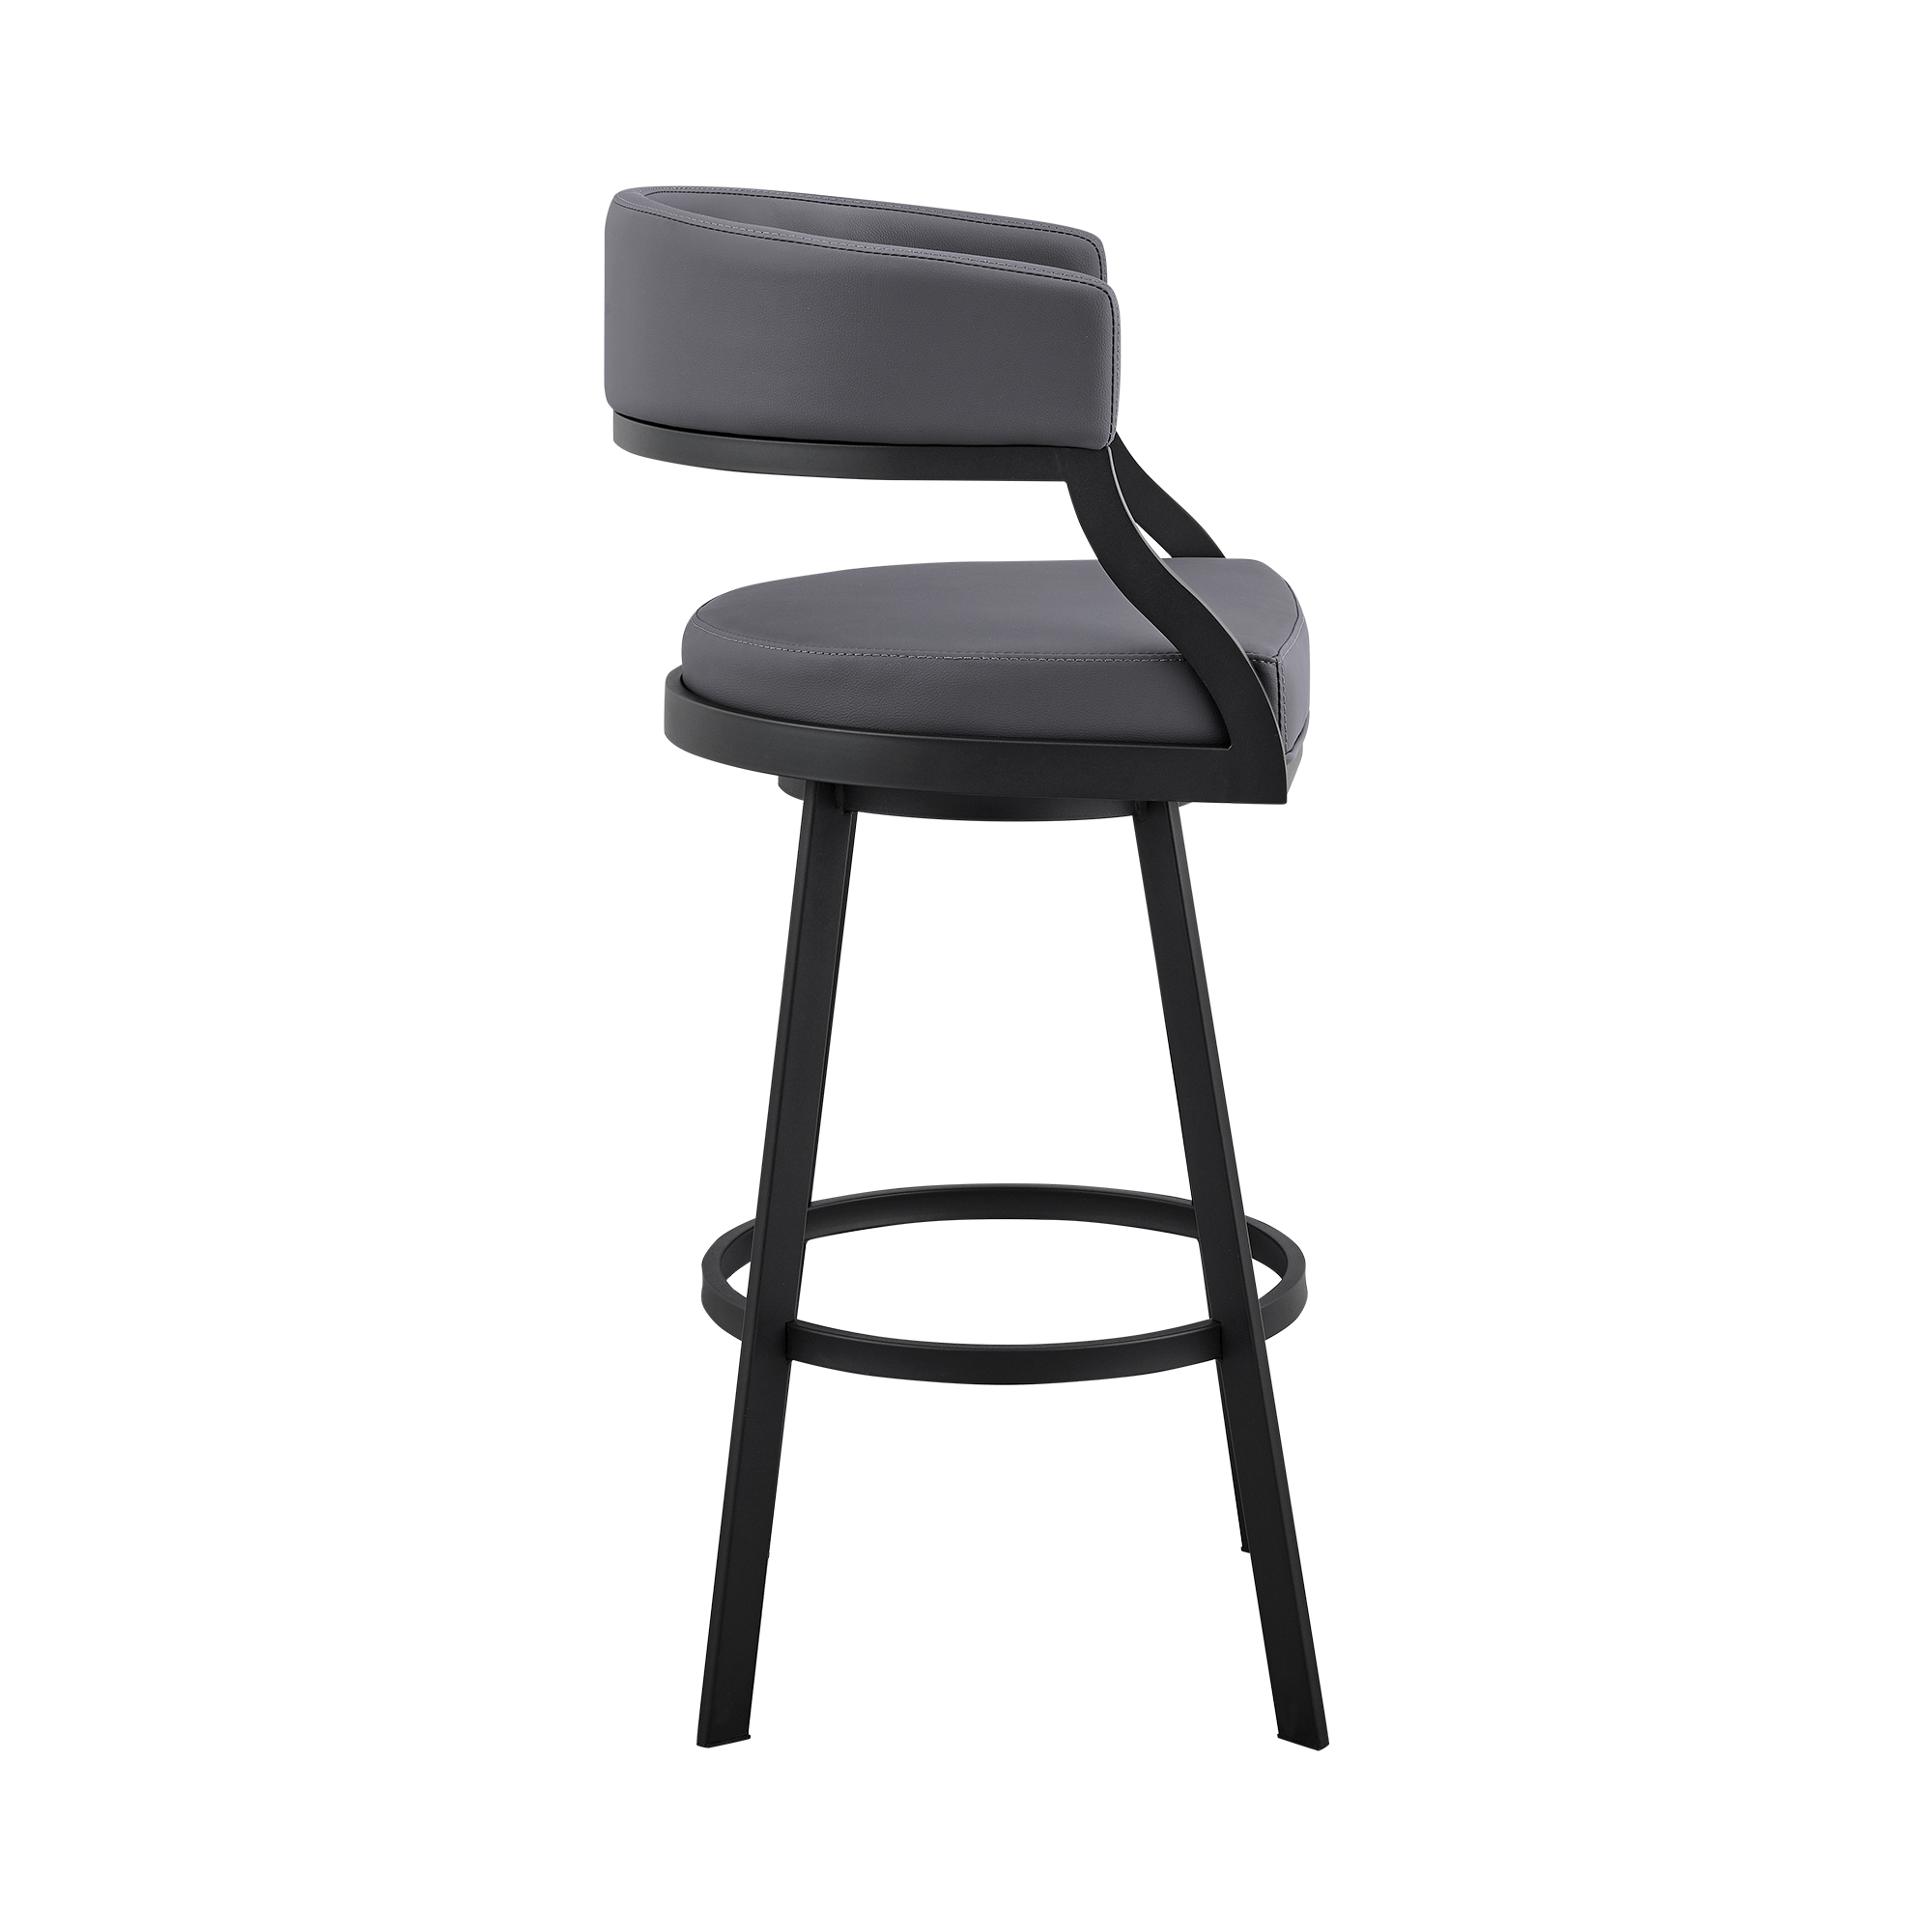 Ava 26 Inch Swivel Counter Stool Chair, Round Gray Faux Leather Cushions- Saltoro Sherpi